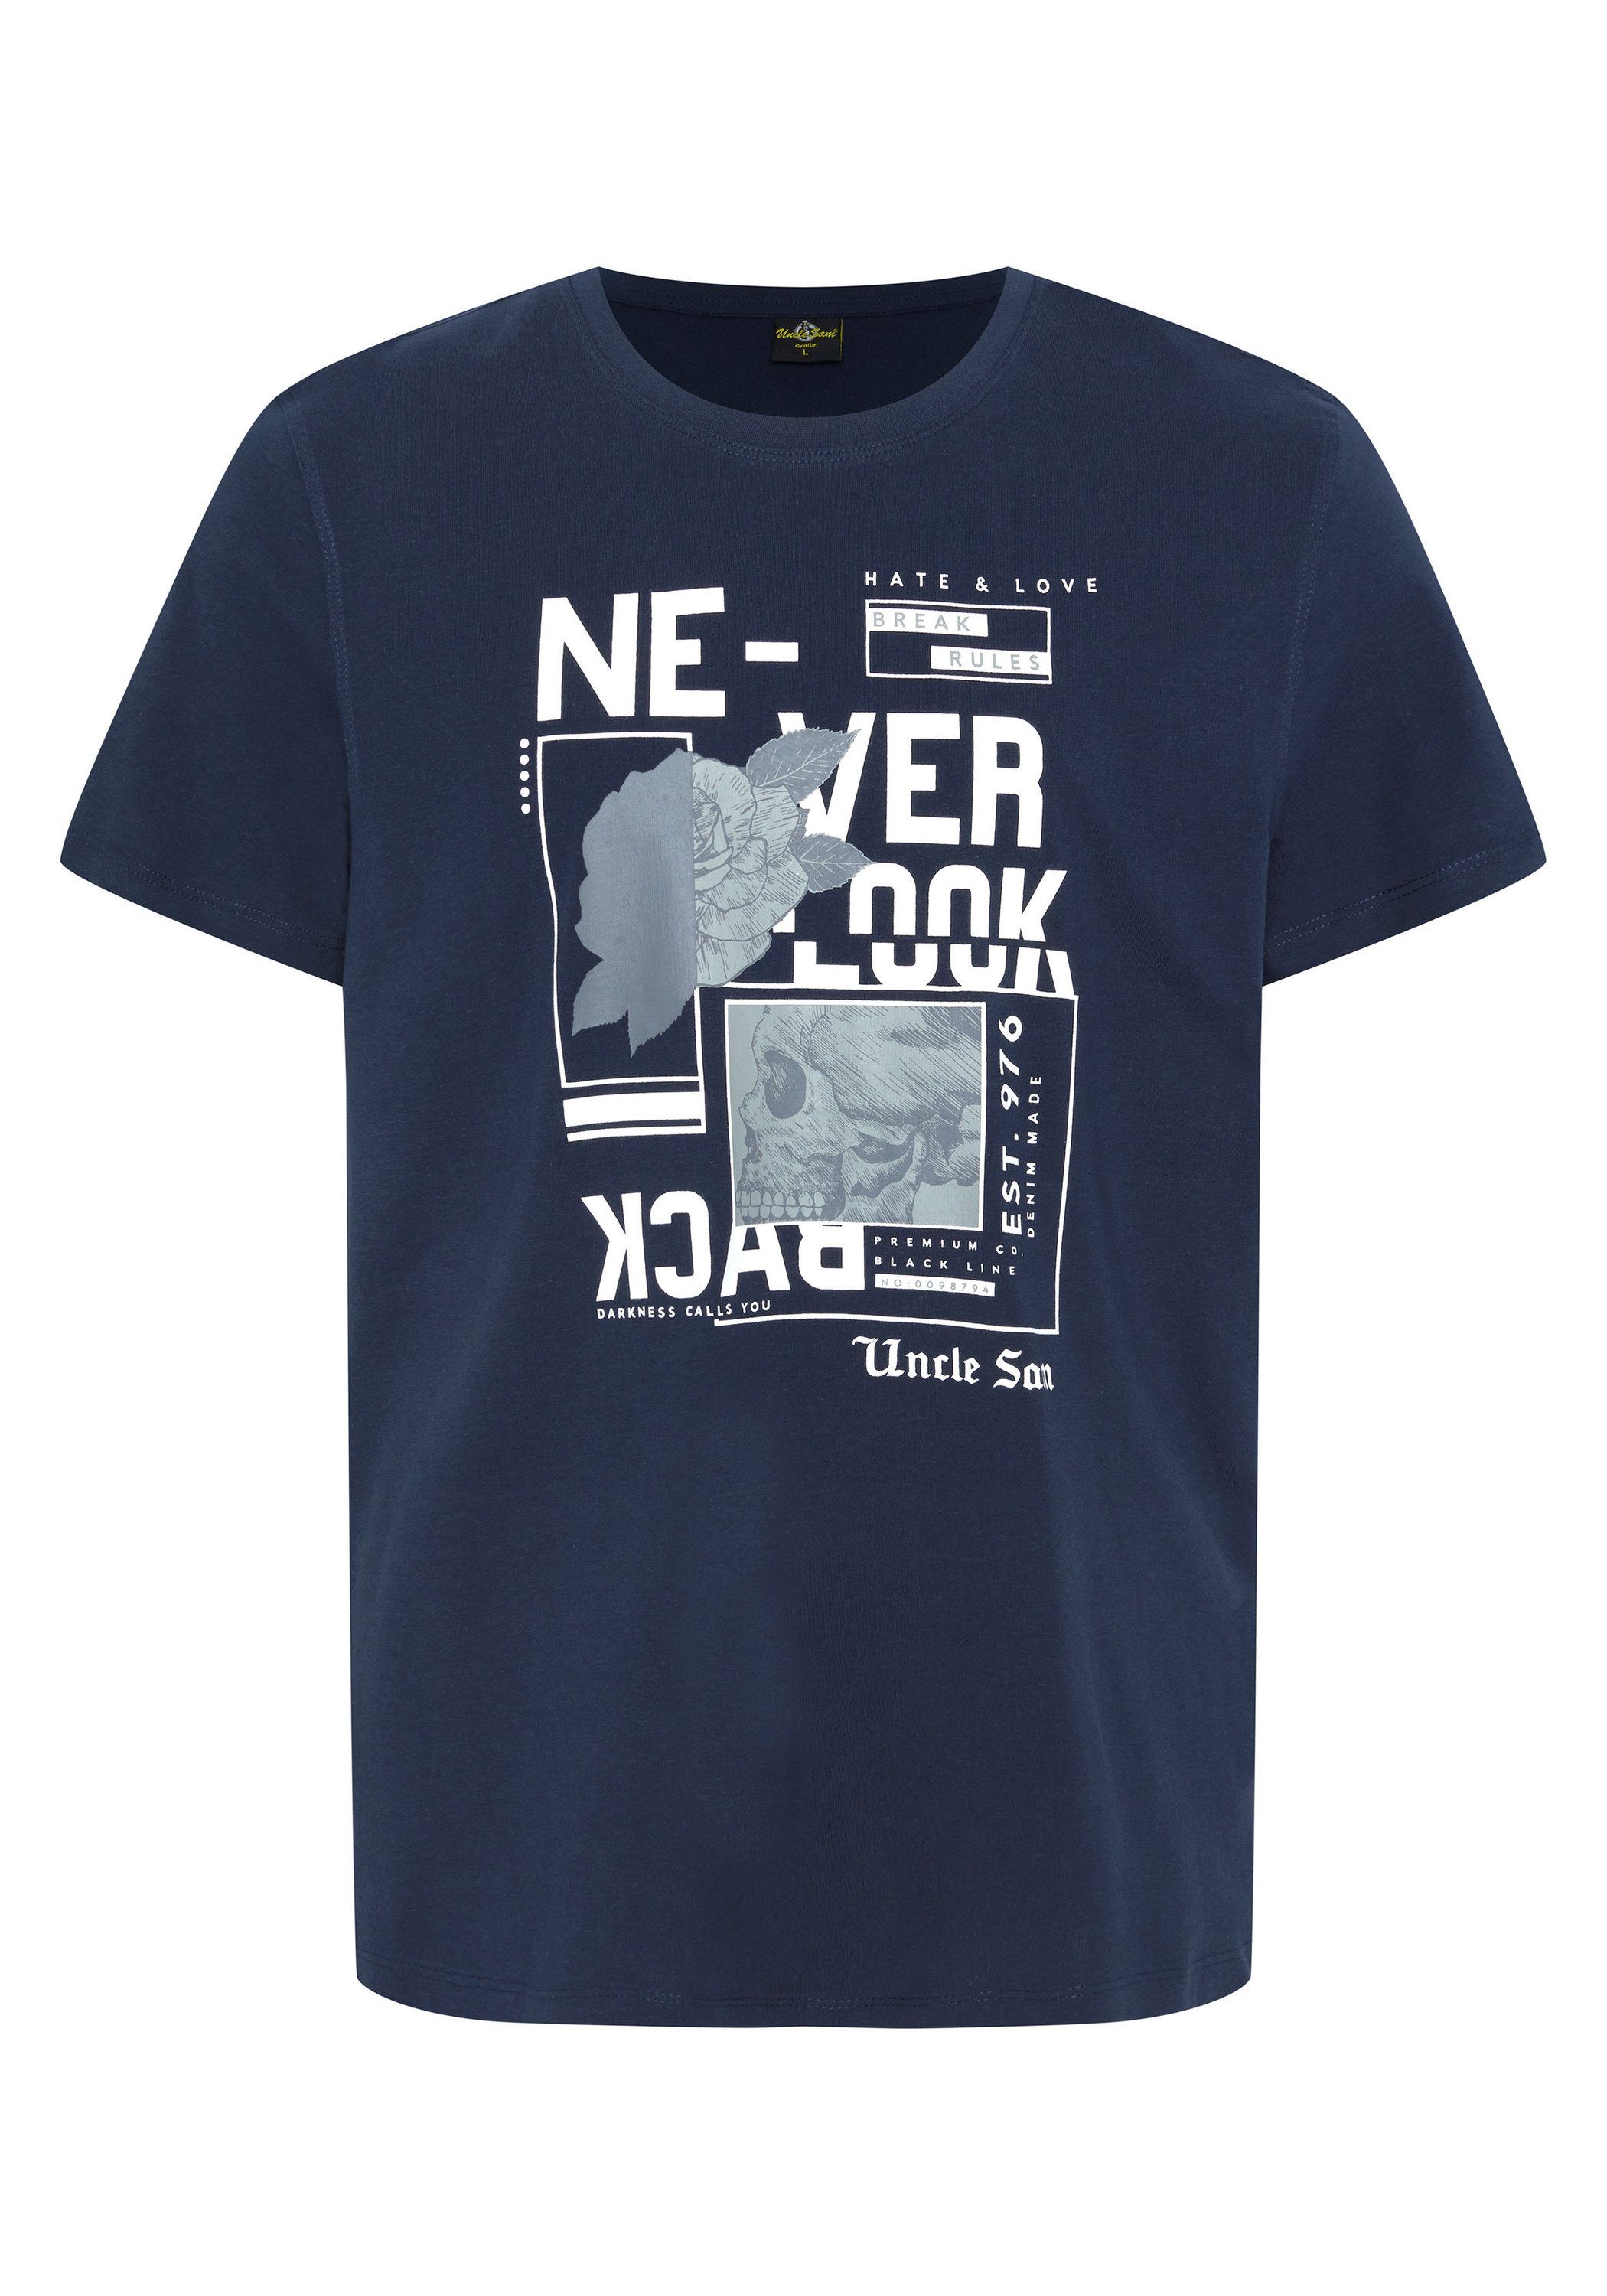 Uncle Sam Print-Shirt mit NEVER LOOK BACK Schriftzug 19-3923 Navy Blazer